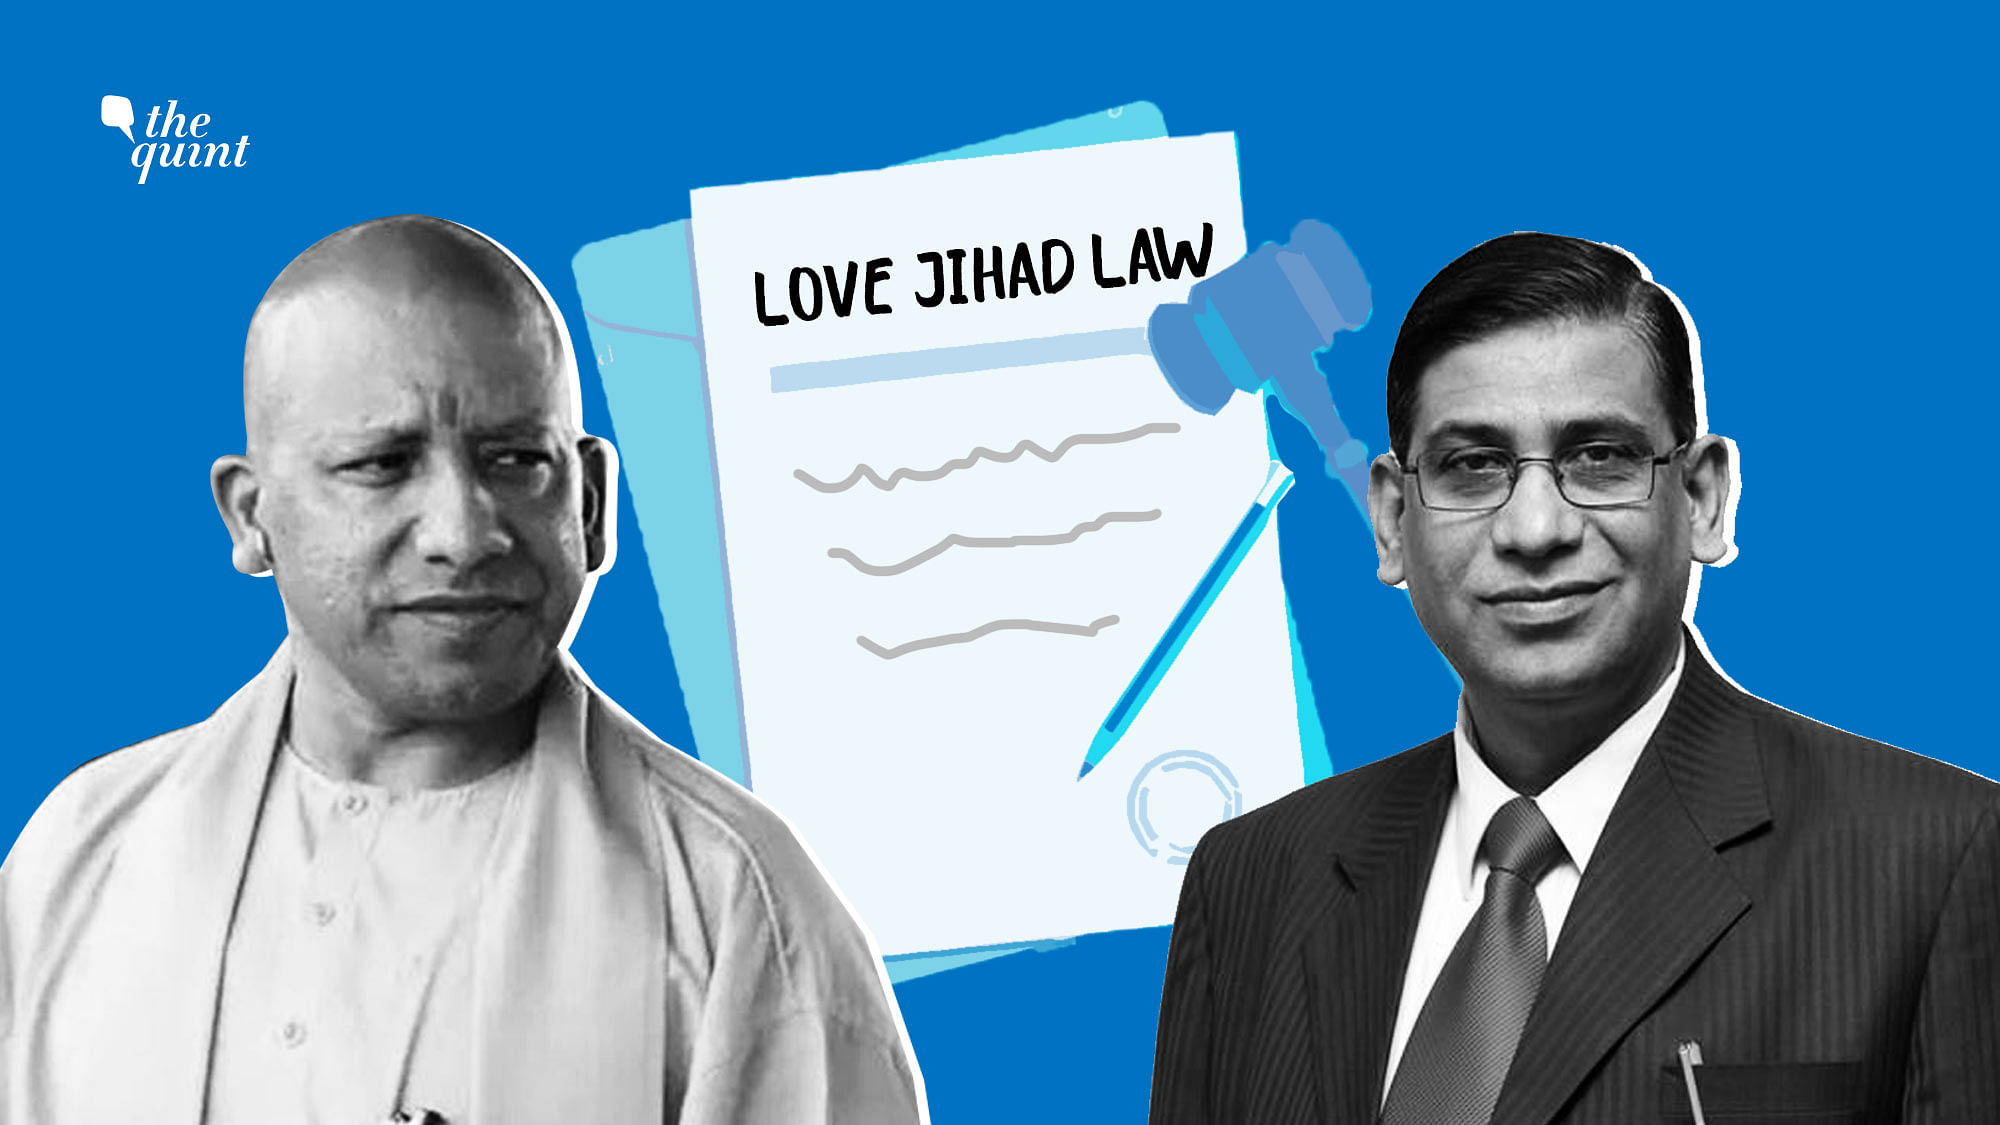 Professor Faizan Mustafa (R), VC of NALSAR university, explains why UP CM Yogi Adityanath (L)‘s love jihad law is unconstitutional.